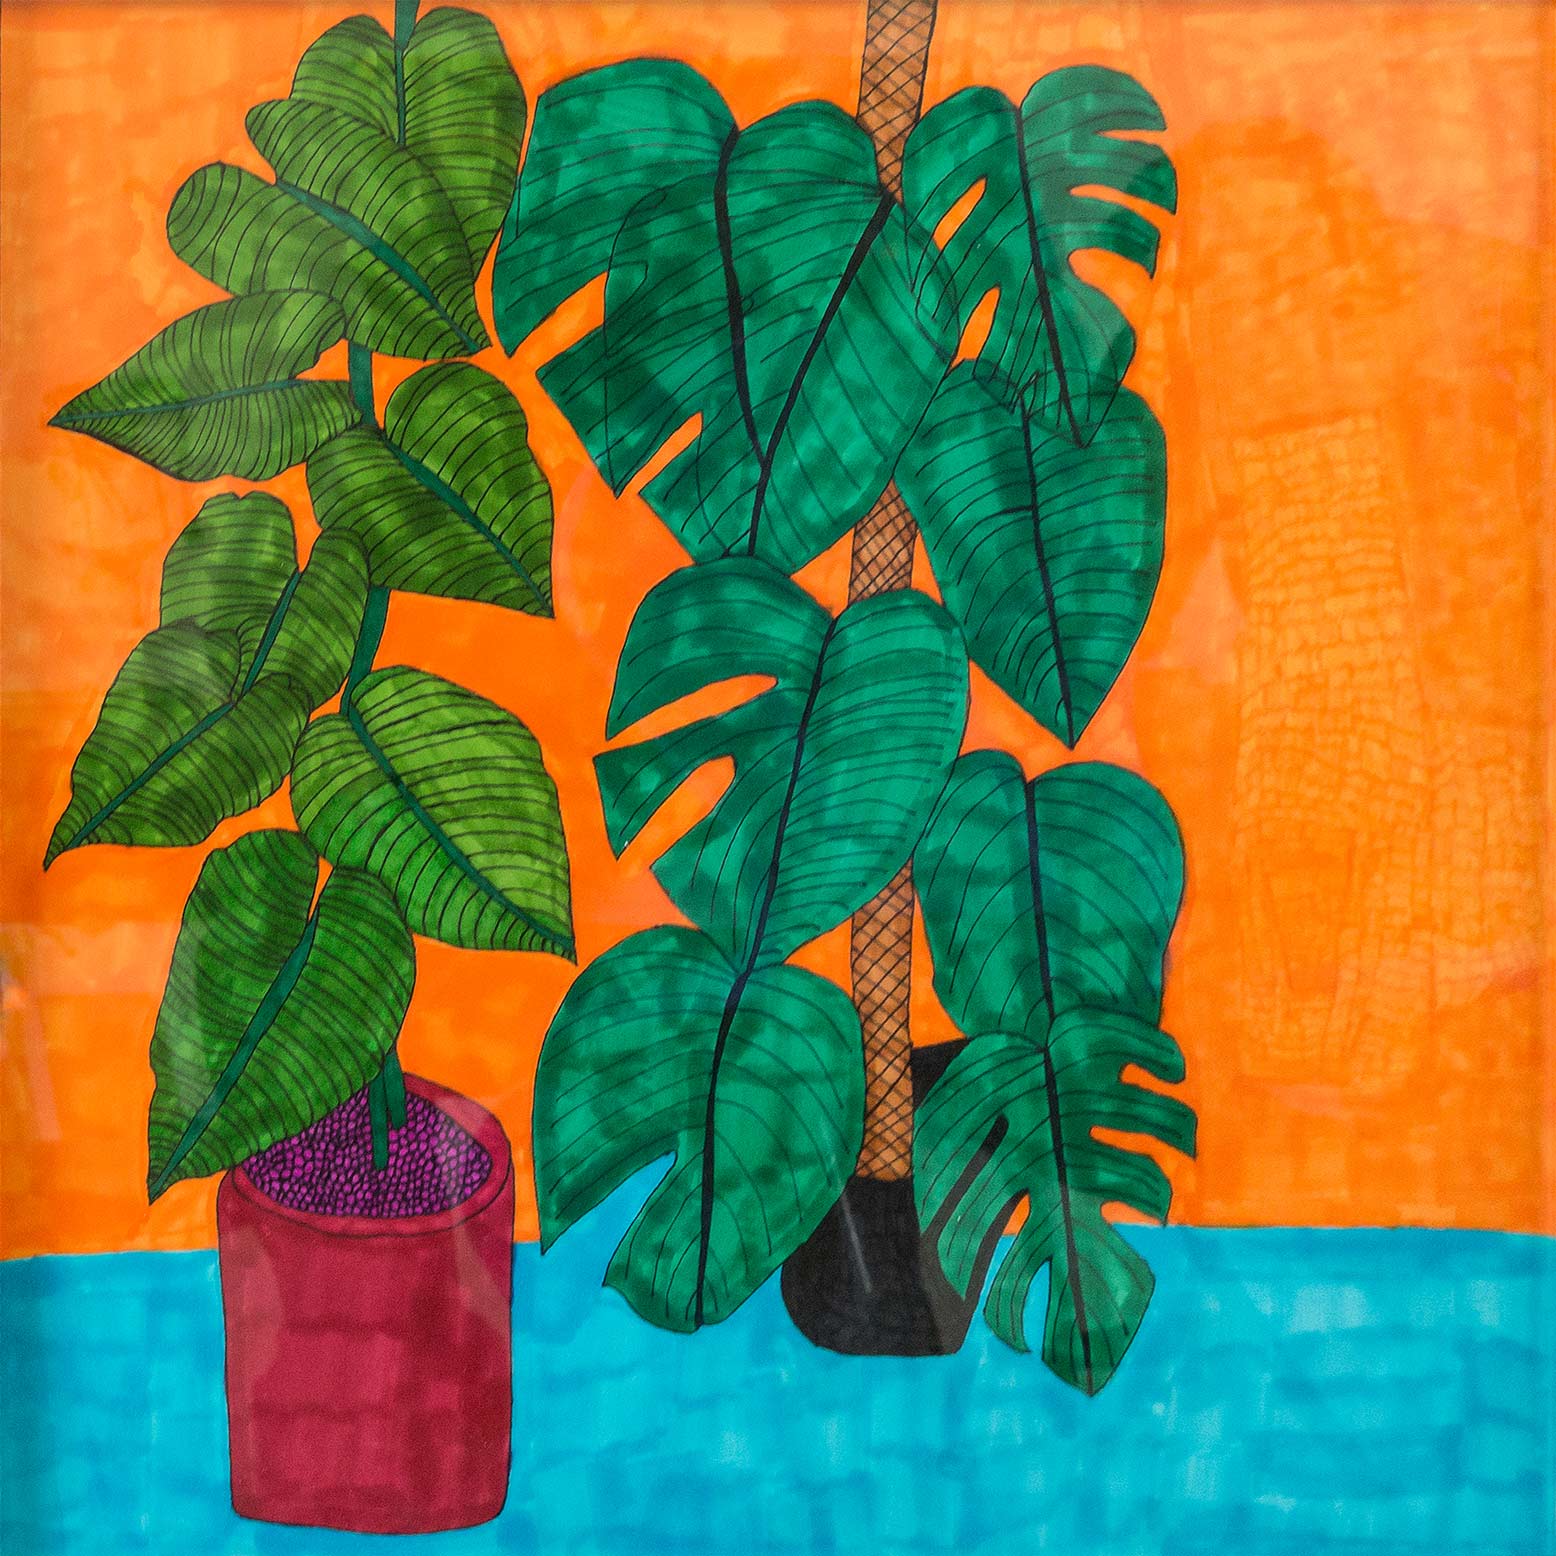 Square artwork of green plant on orange